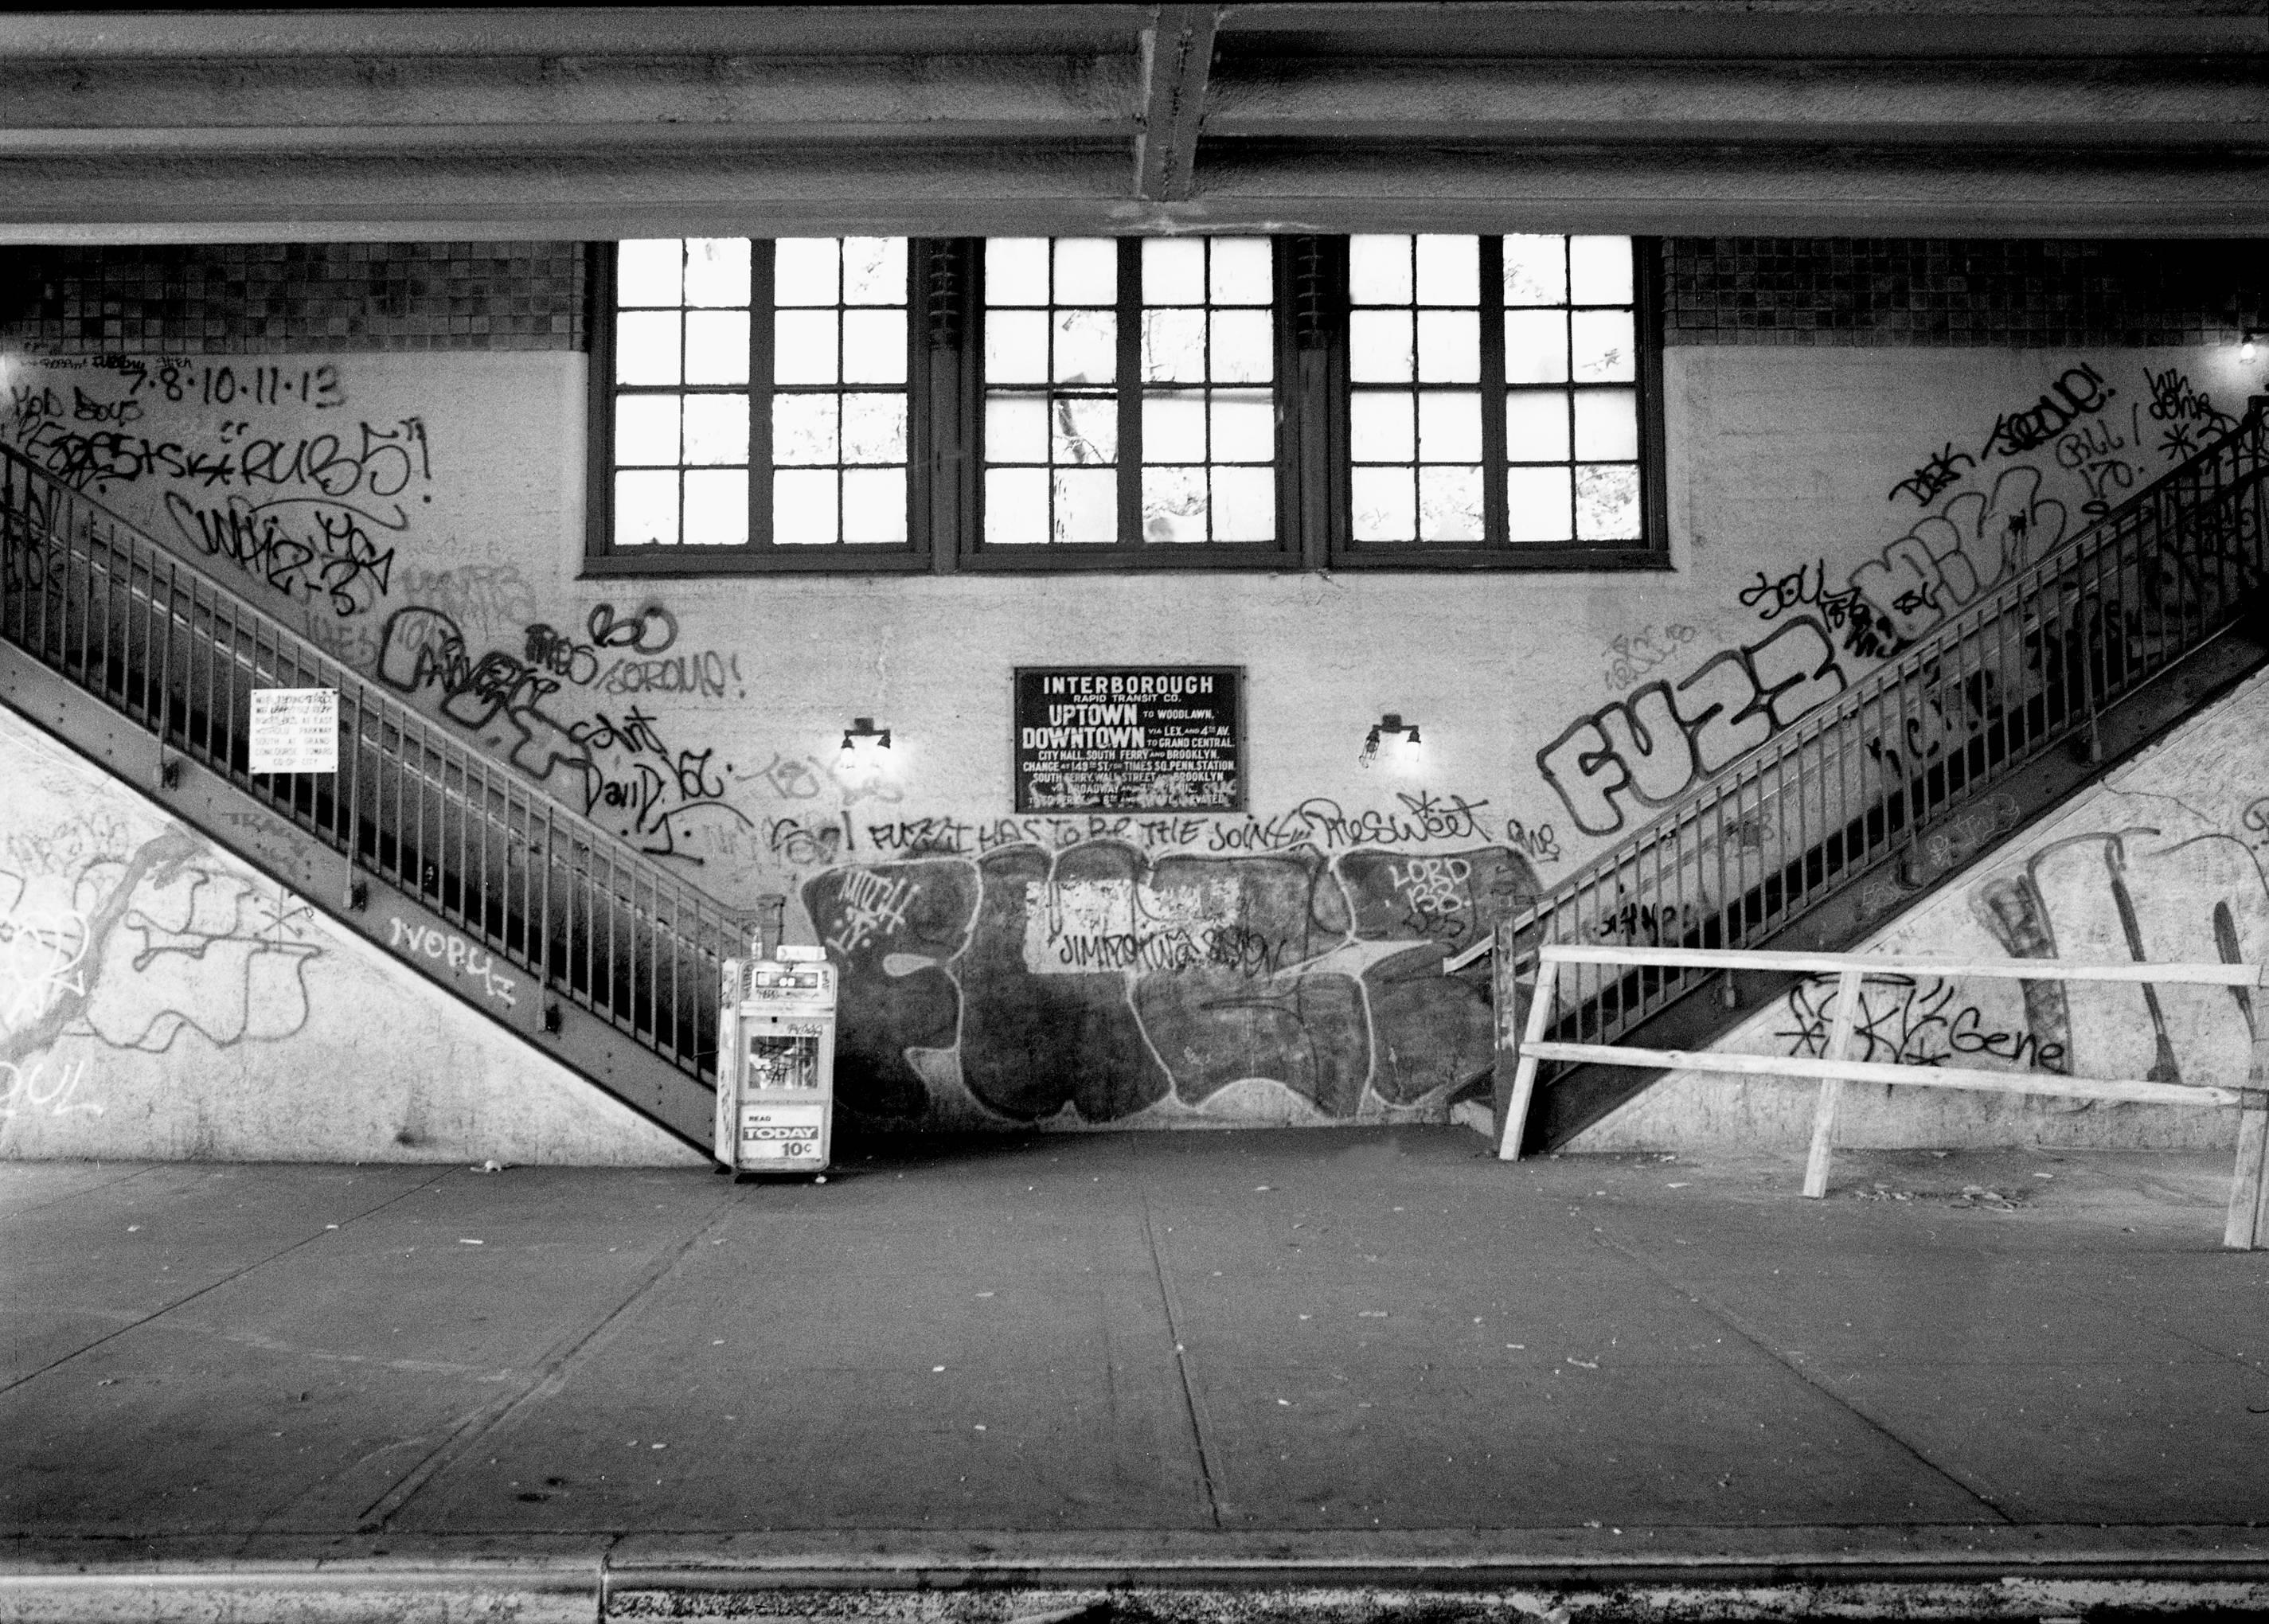 John Conn Landscape Photograph - Subway 27, Black & White Photograph, NYC, 1980s, Limited Edition, Subway Station